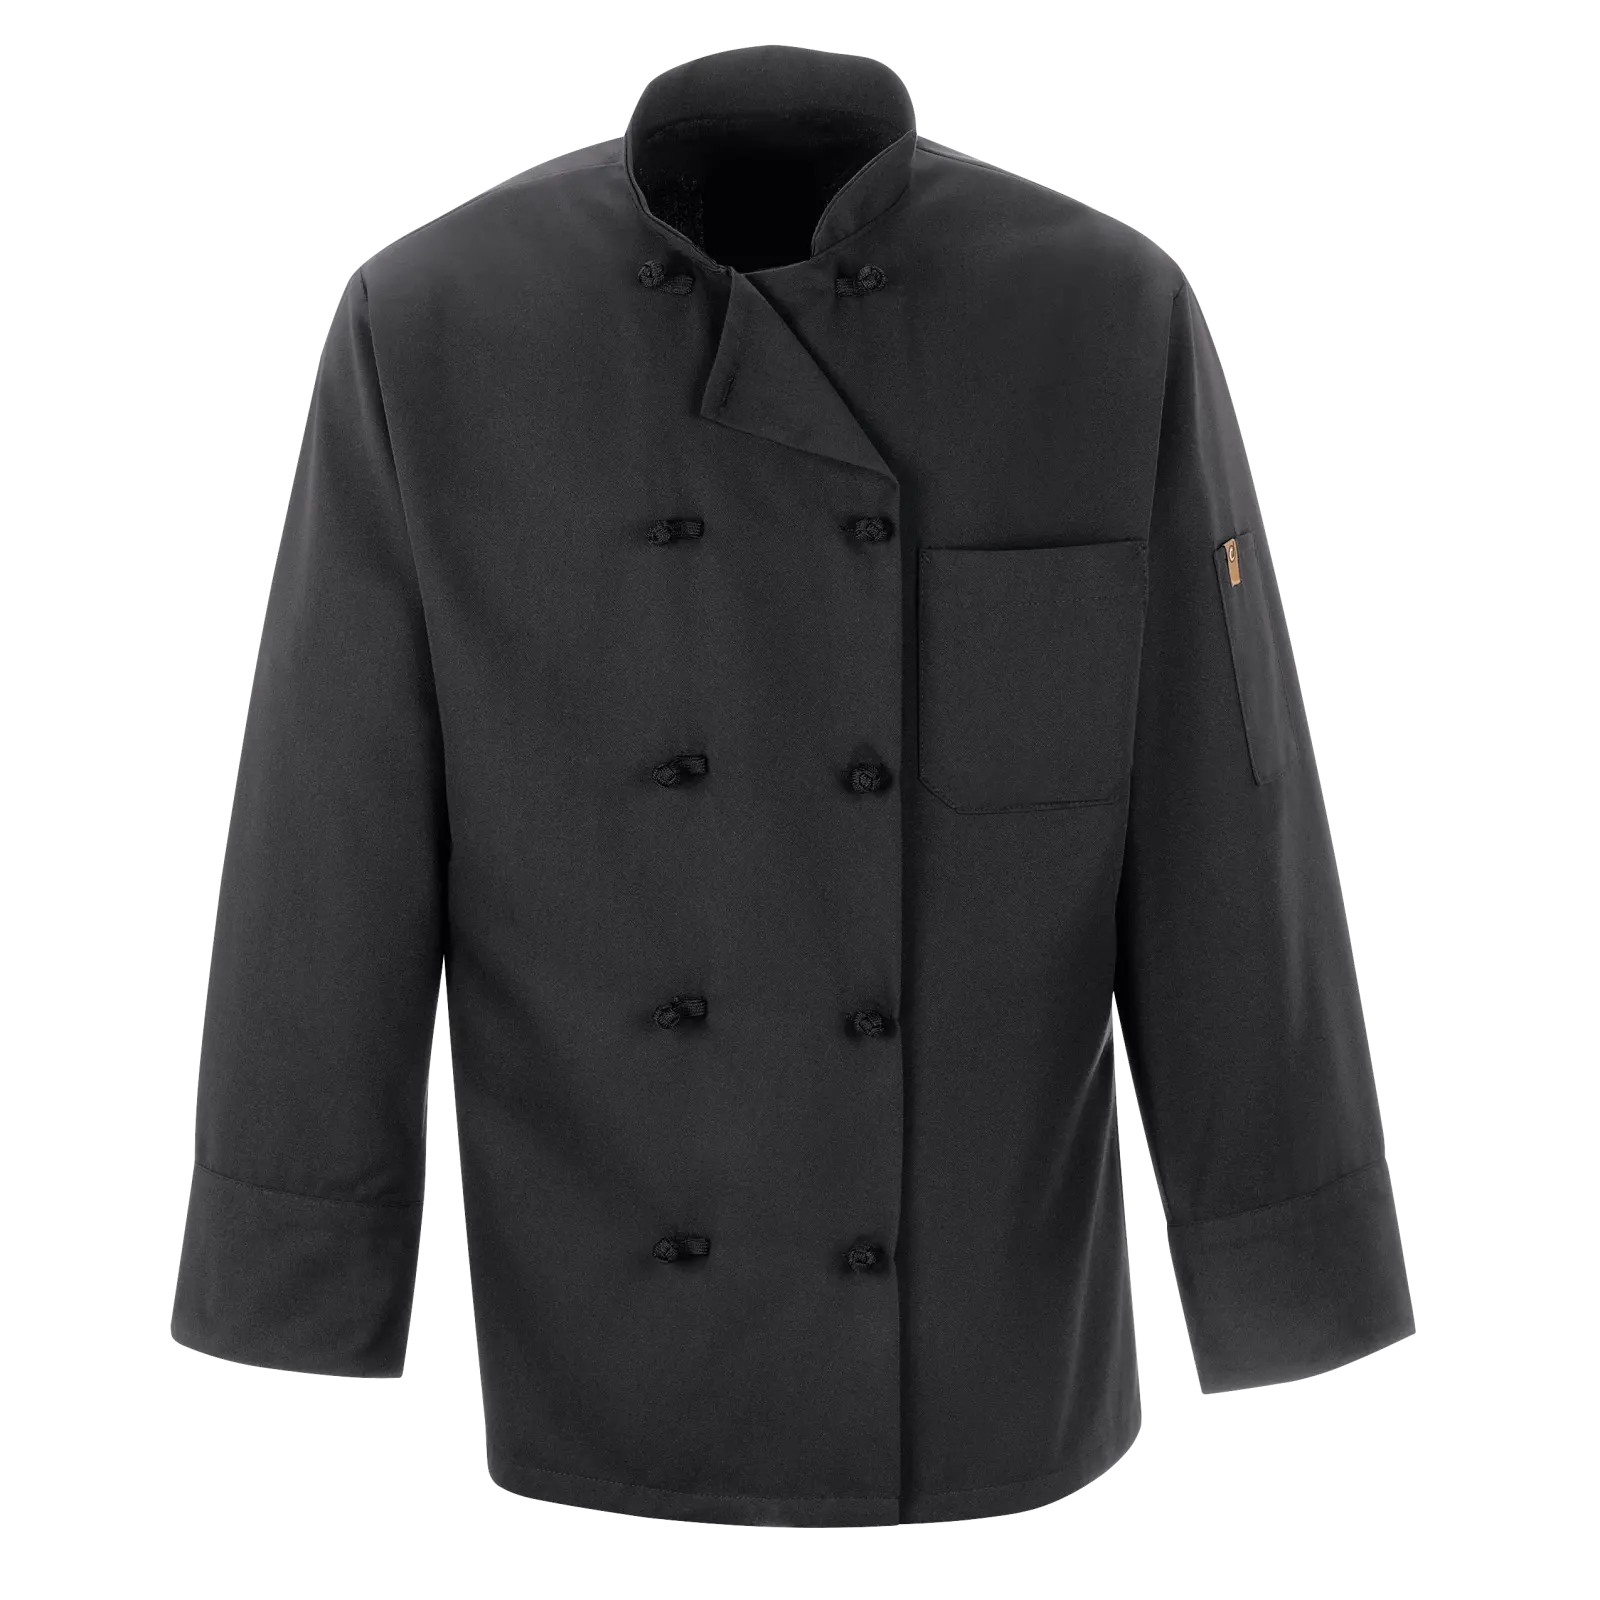 Black Chef Coat Ten Knot Buttons-